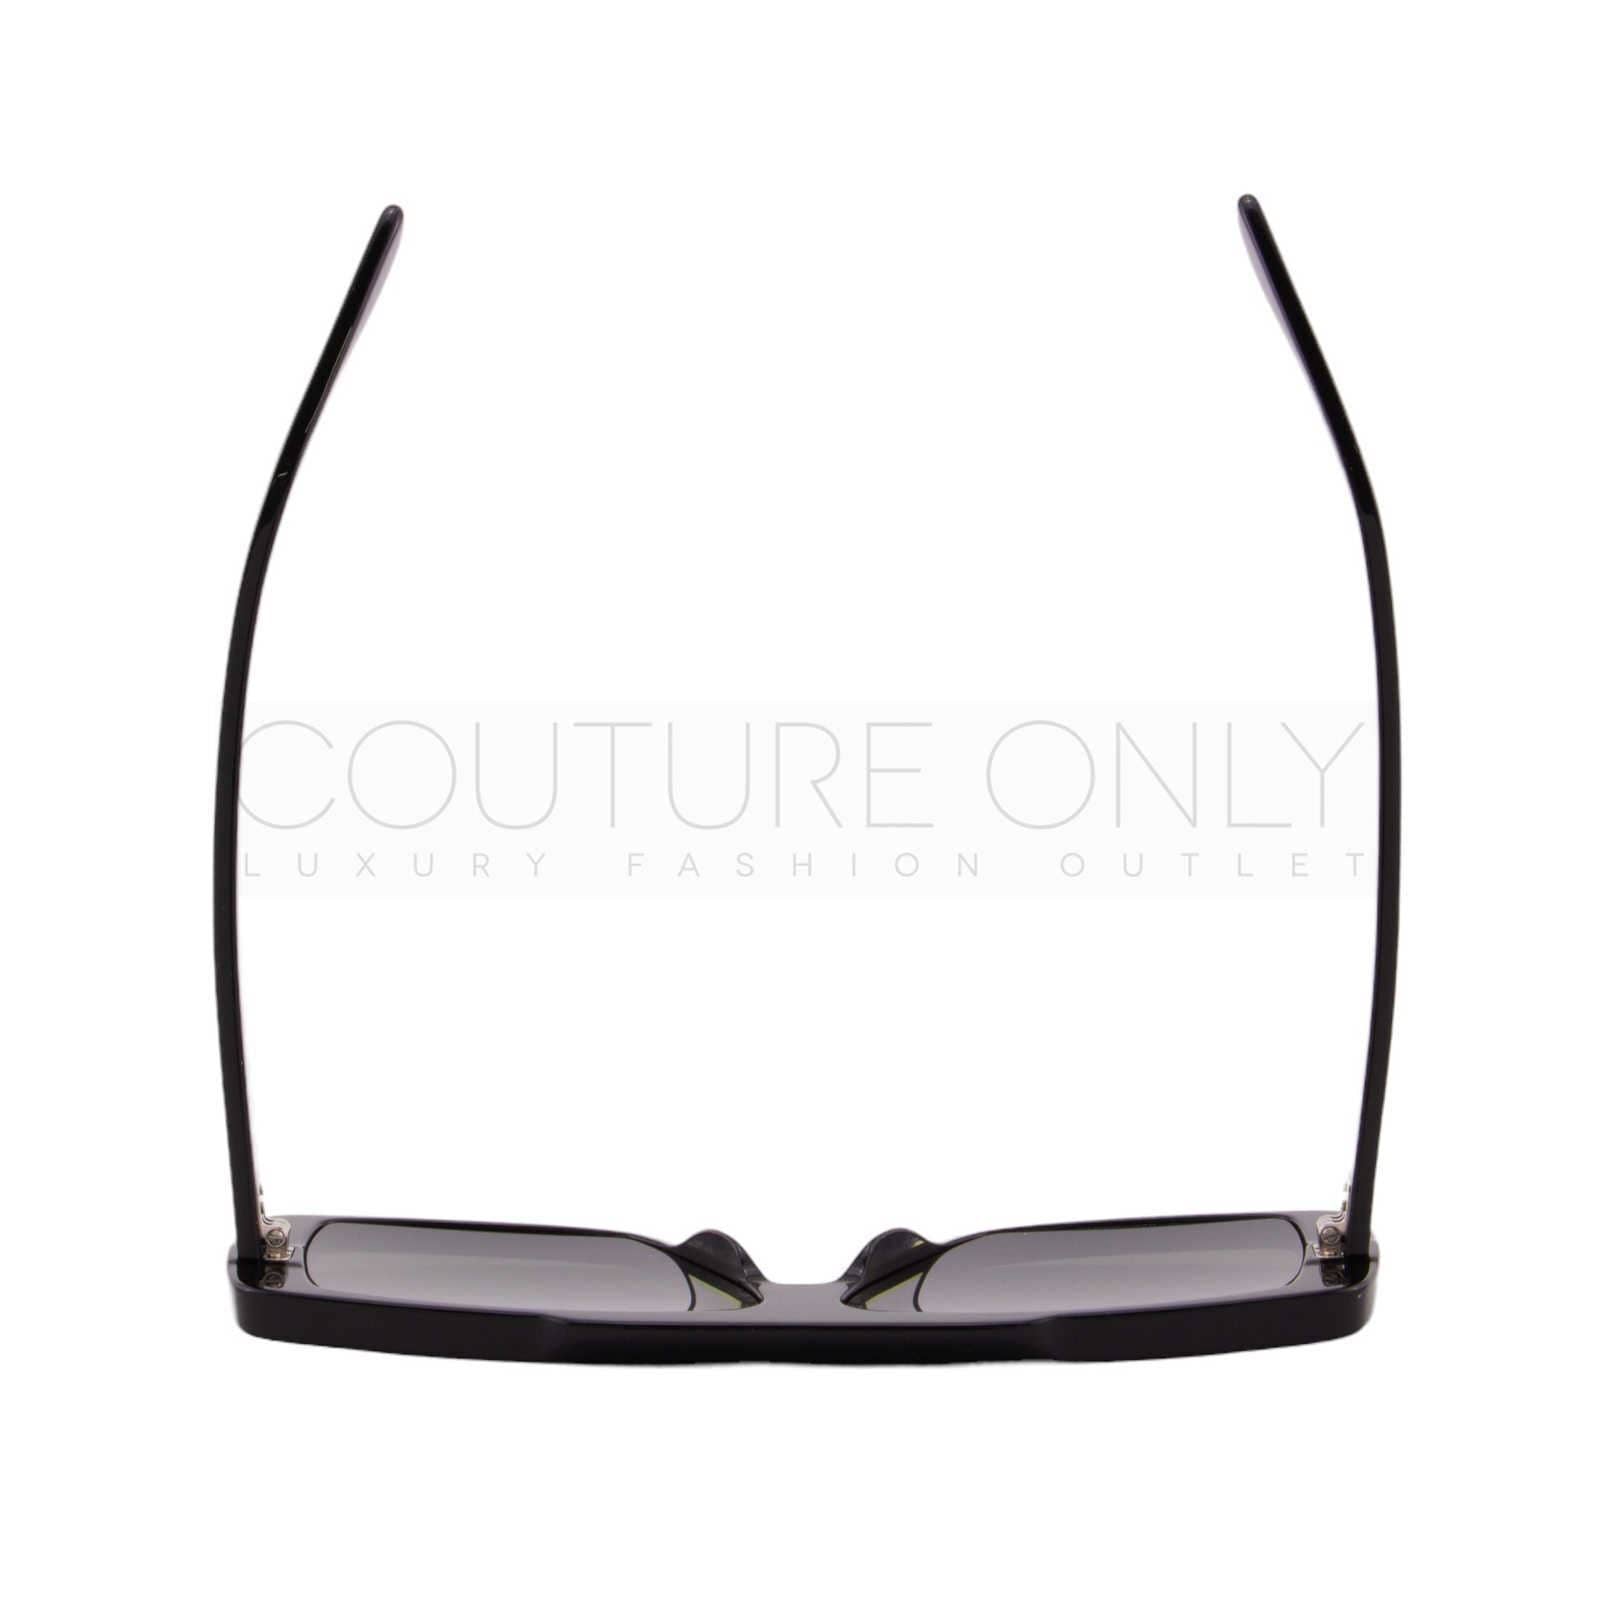 Women Black Oversized Shield Sunglasses GG1369S-001